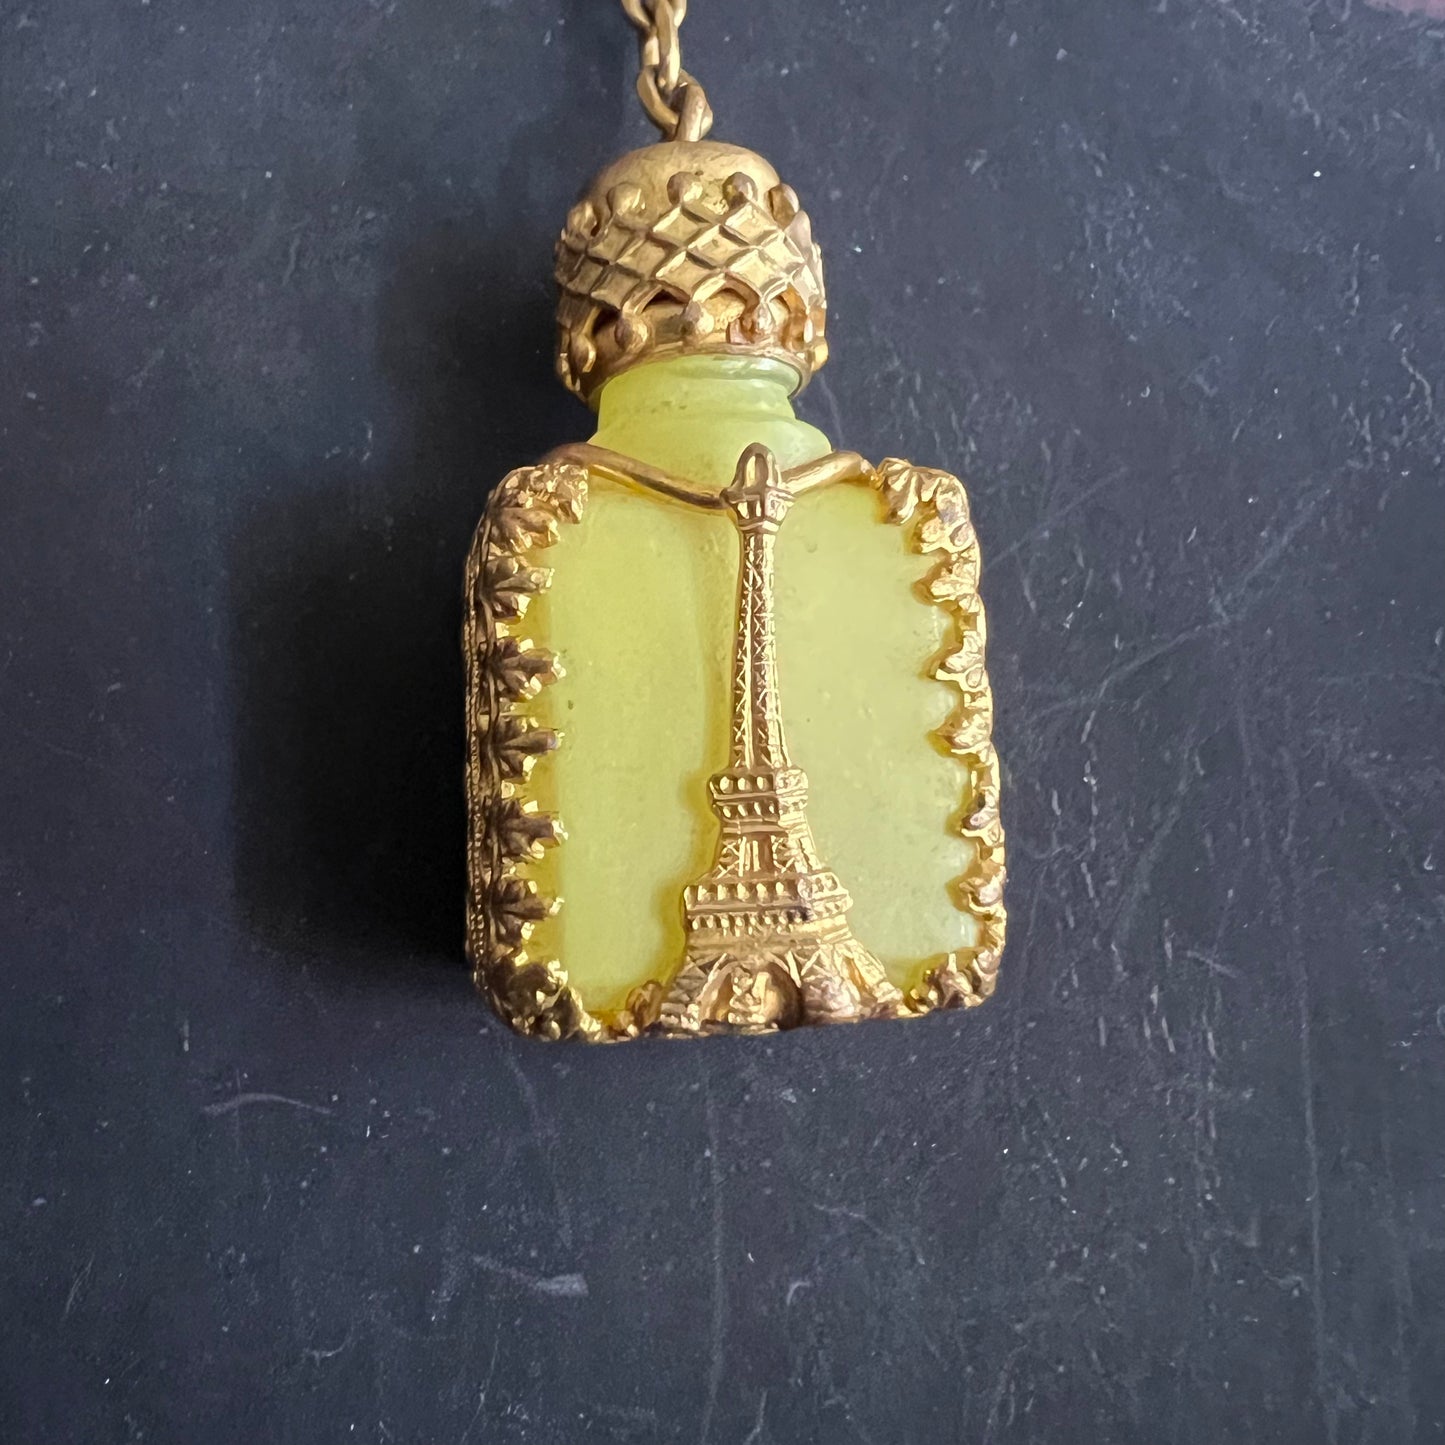 Rare 1930’s Eiffel Tower Paris Perfume Bottle Brooch